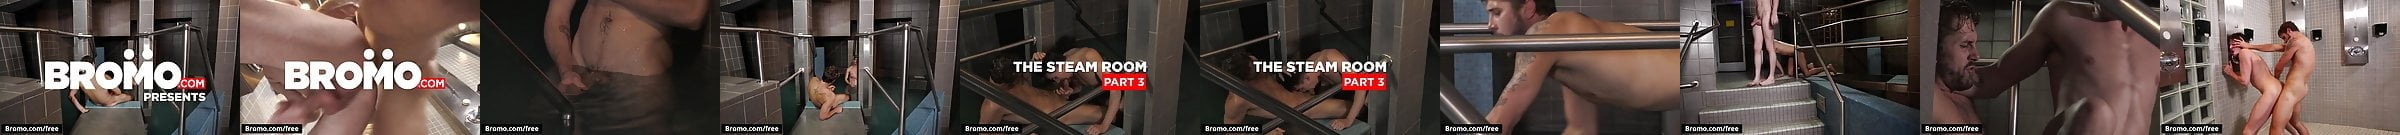 Free Gay Steam Room Porn Videos Xhamster